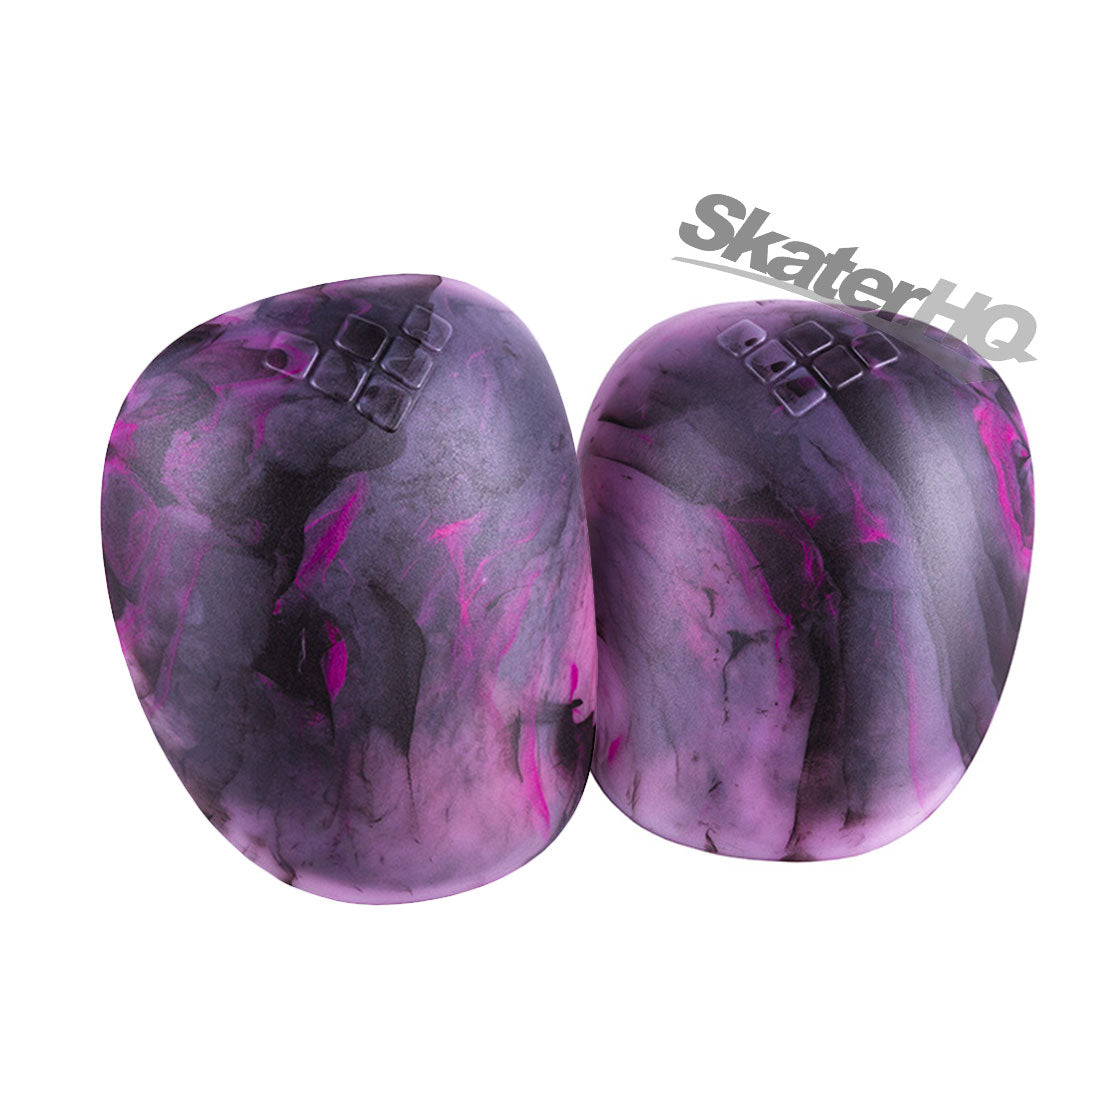 GAIN Shield Replacement Caps - Purple/Black Swirl Protective Gear